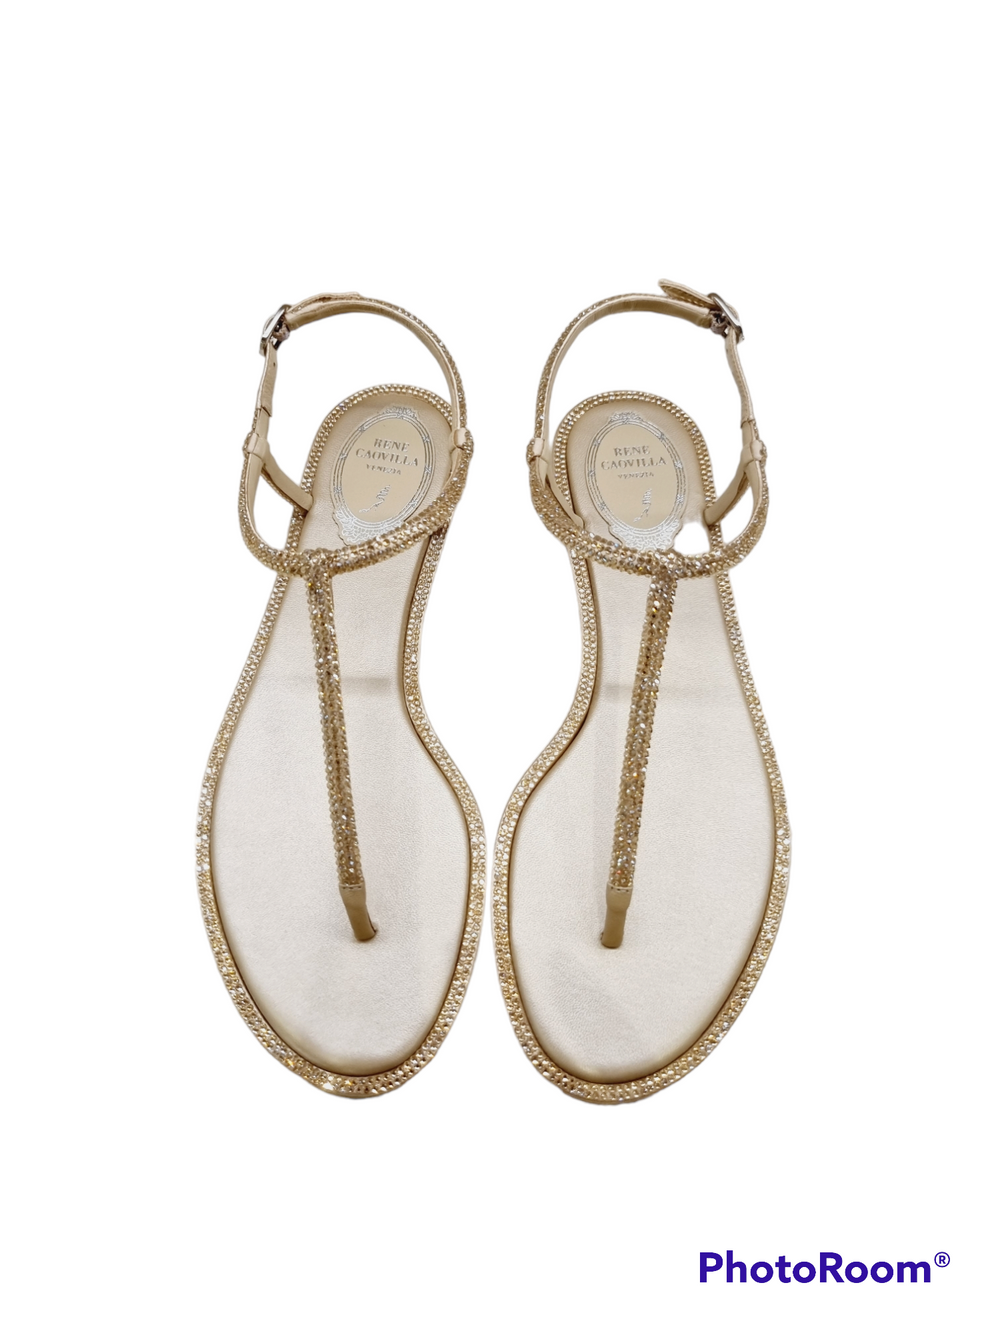 Diana Gold Jewel Sandals - Rene Caovilla - Liberty Shoes Australia